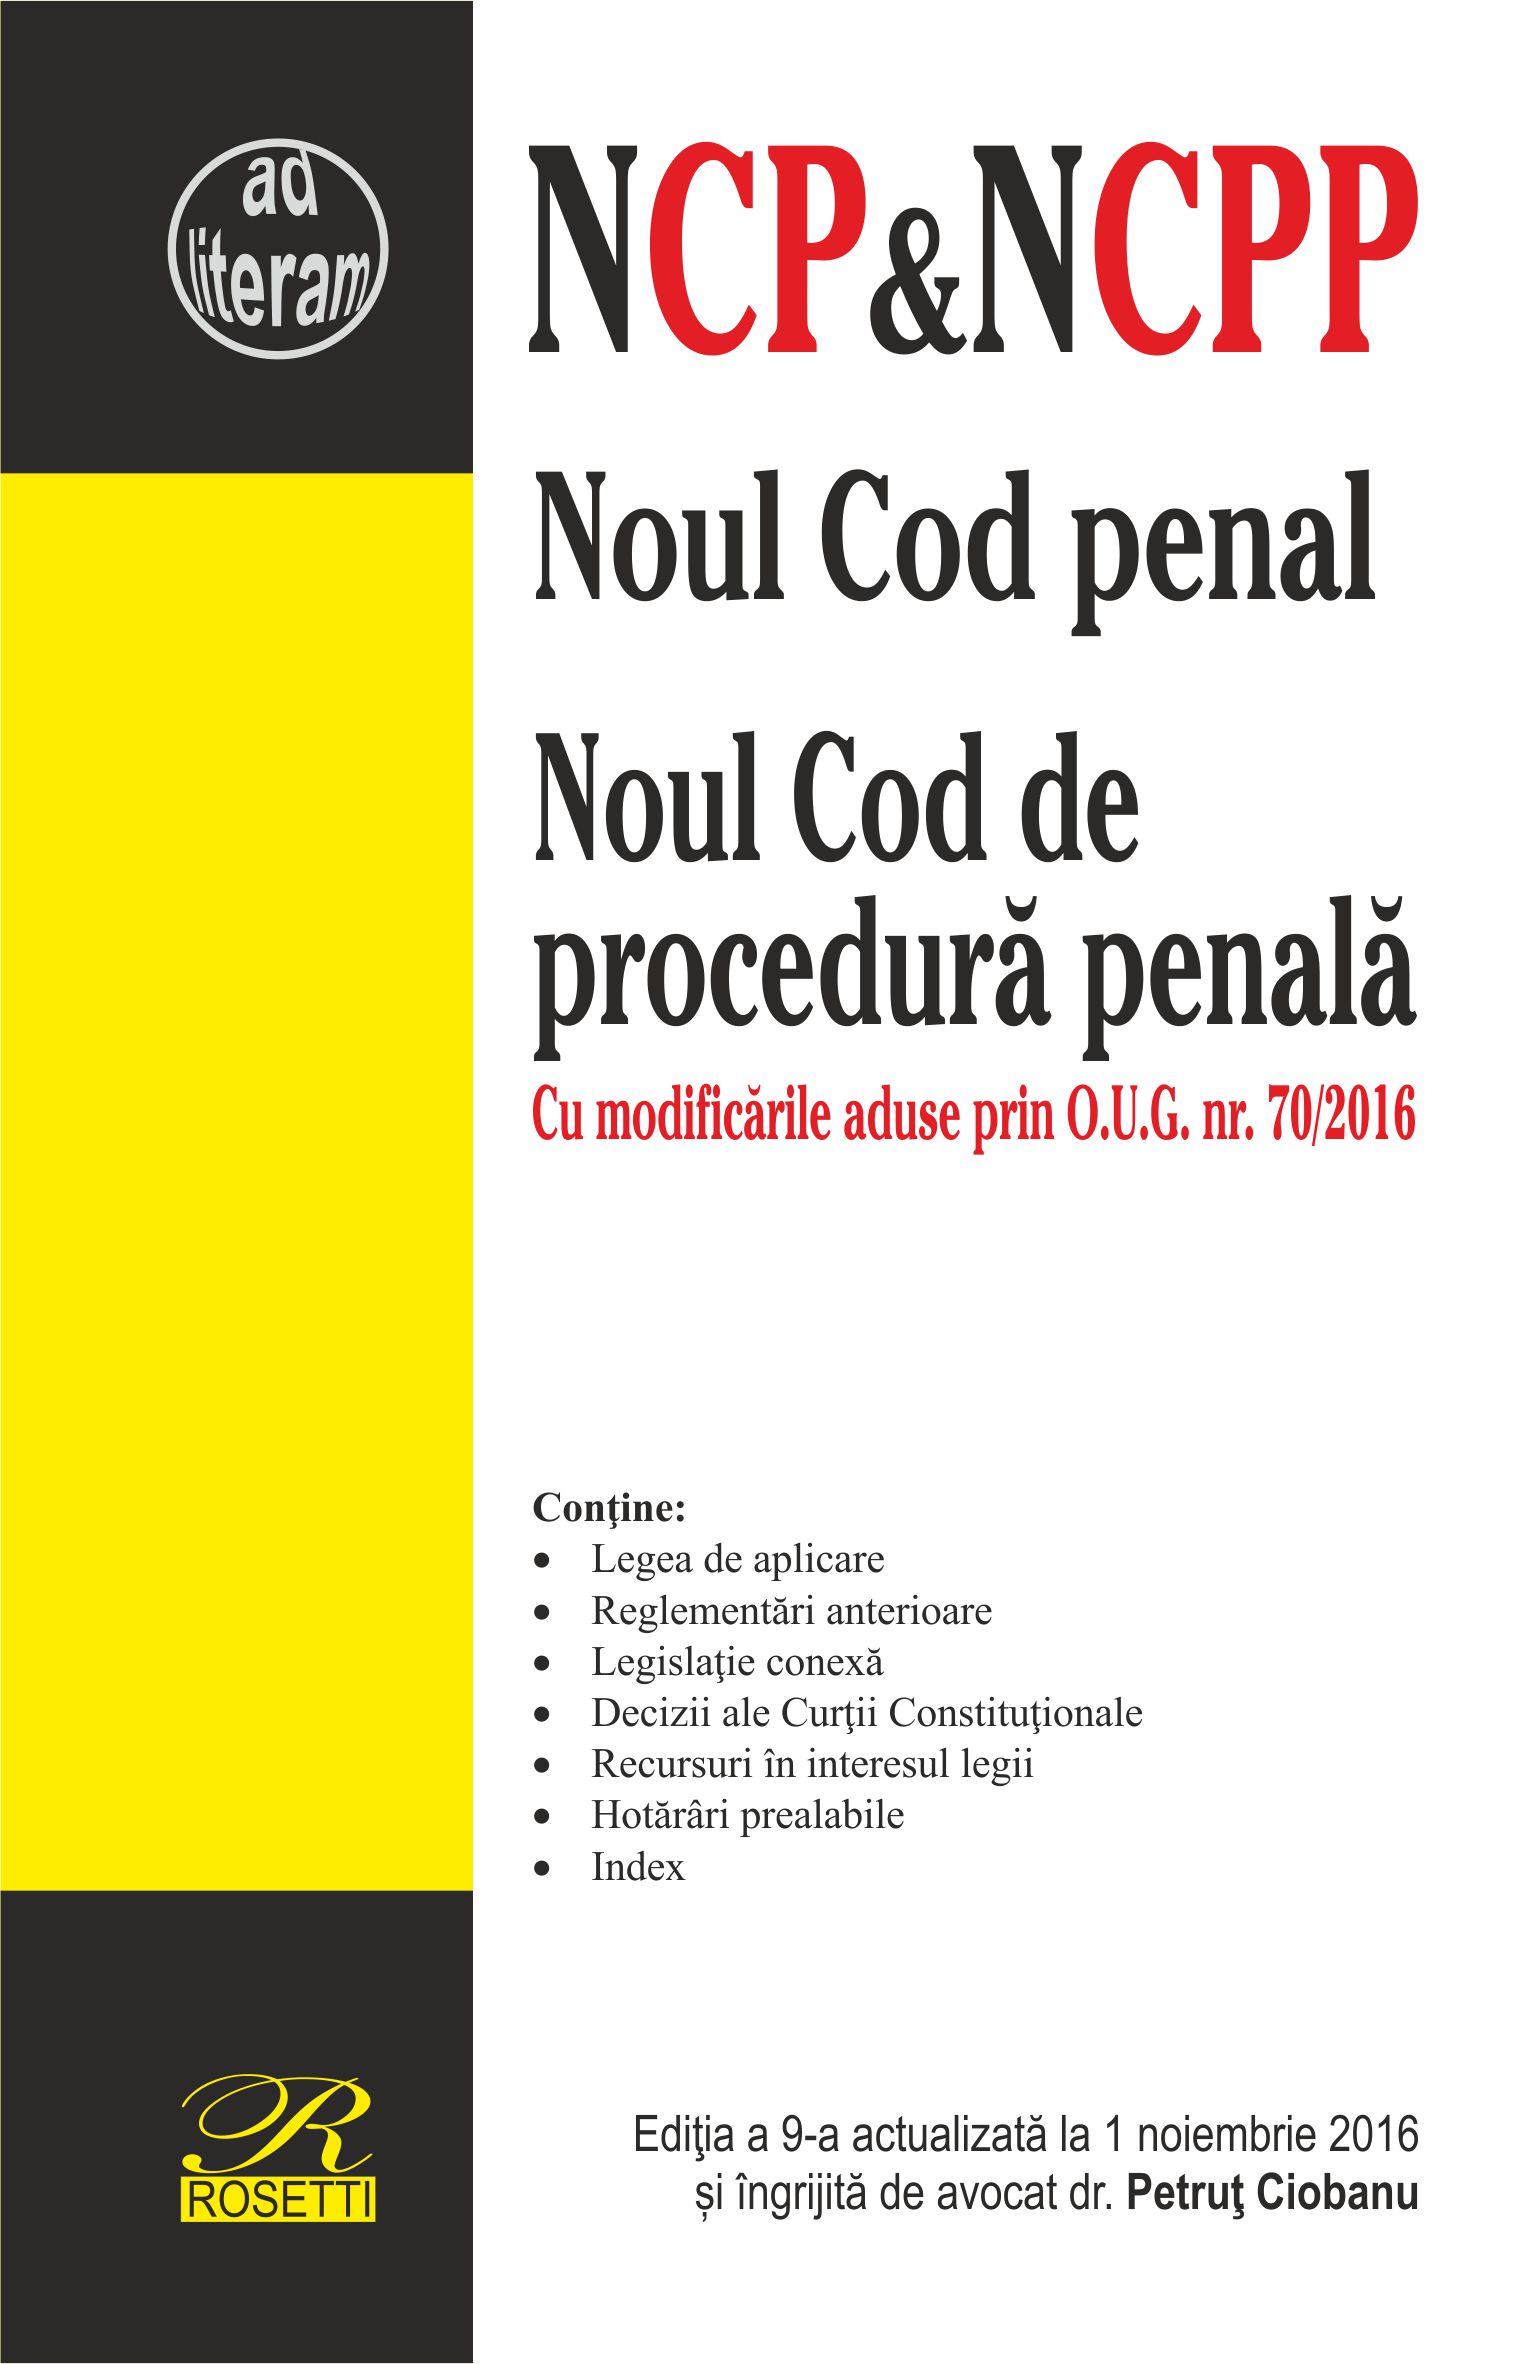 Noul Cod penal. Noul Cod de procedura penala Act. 1 Noiembrie 2016